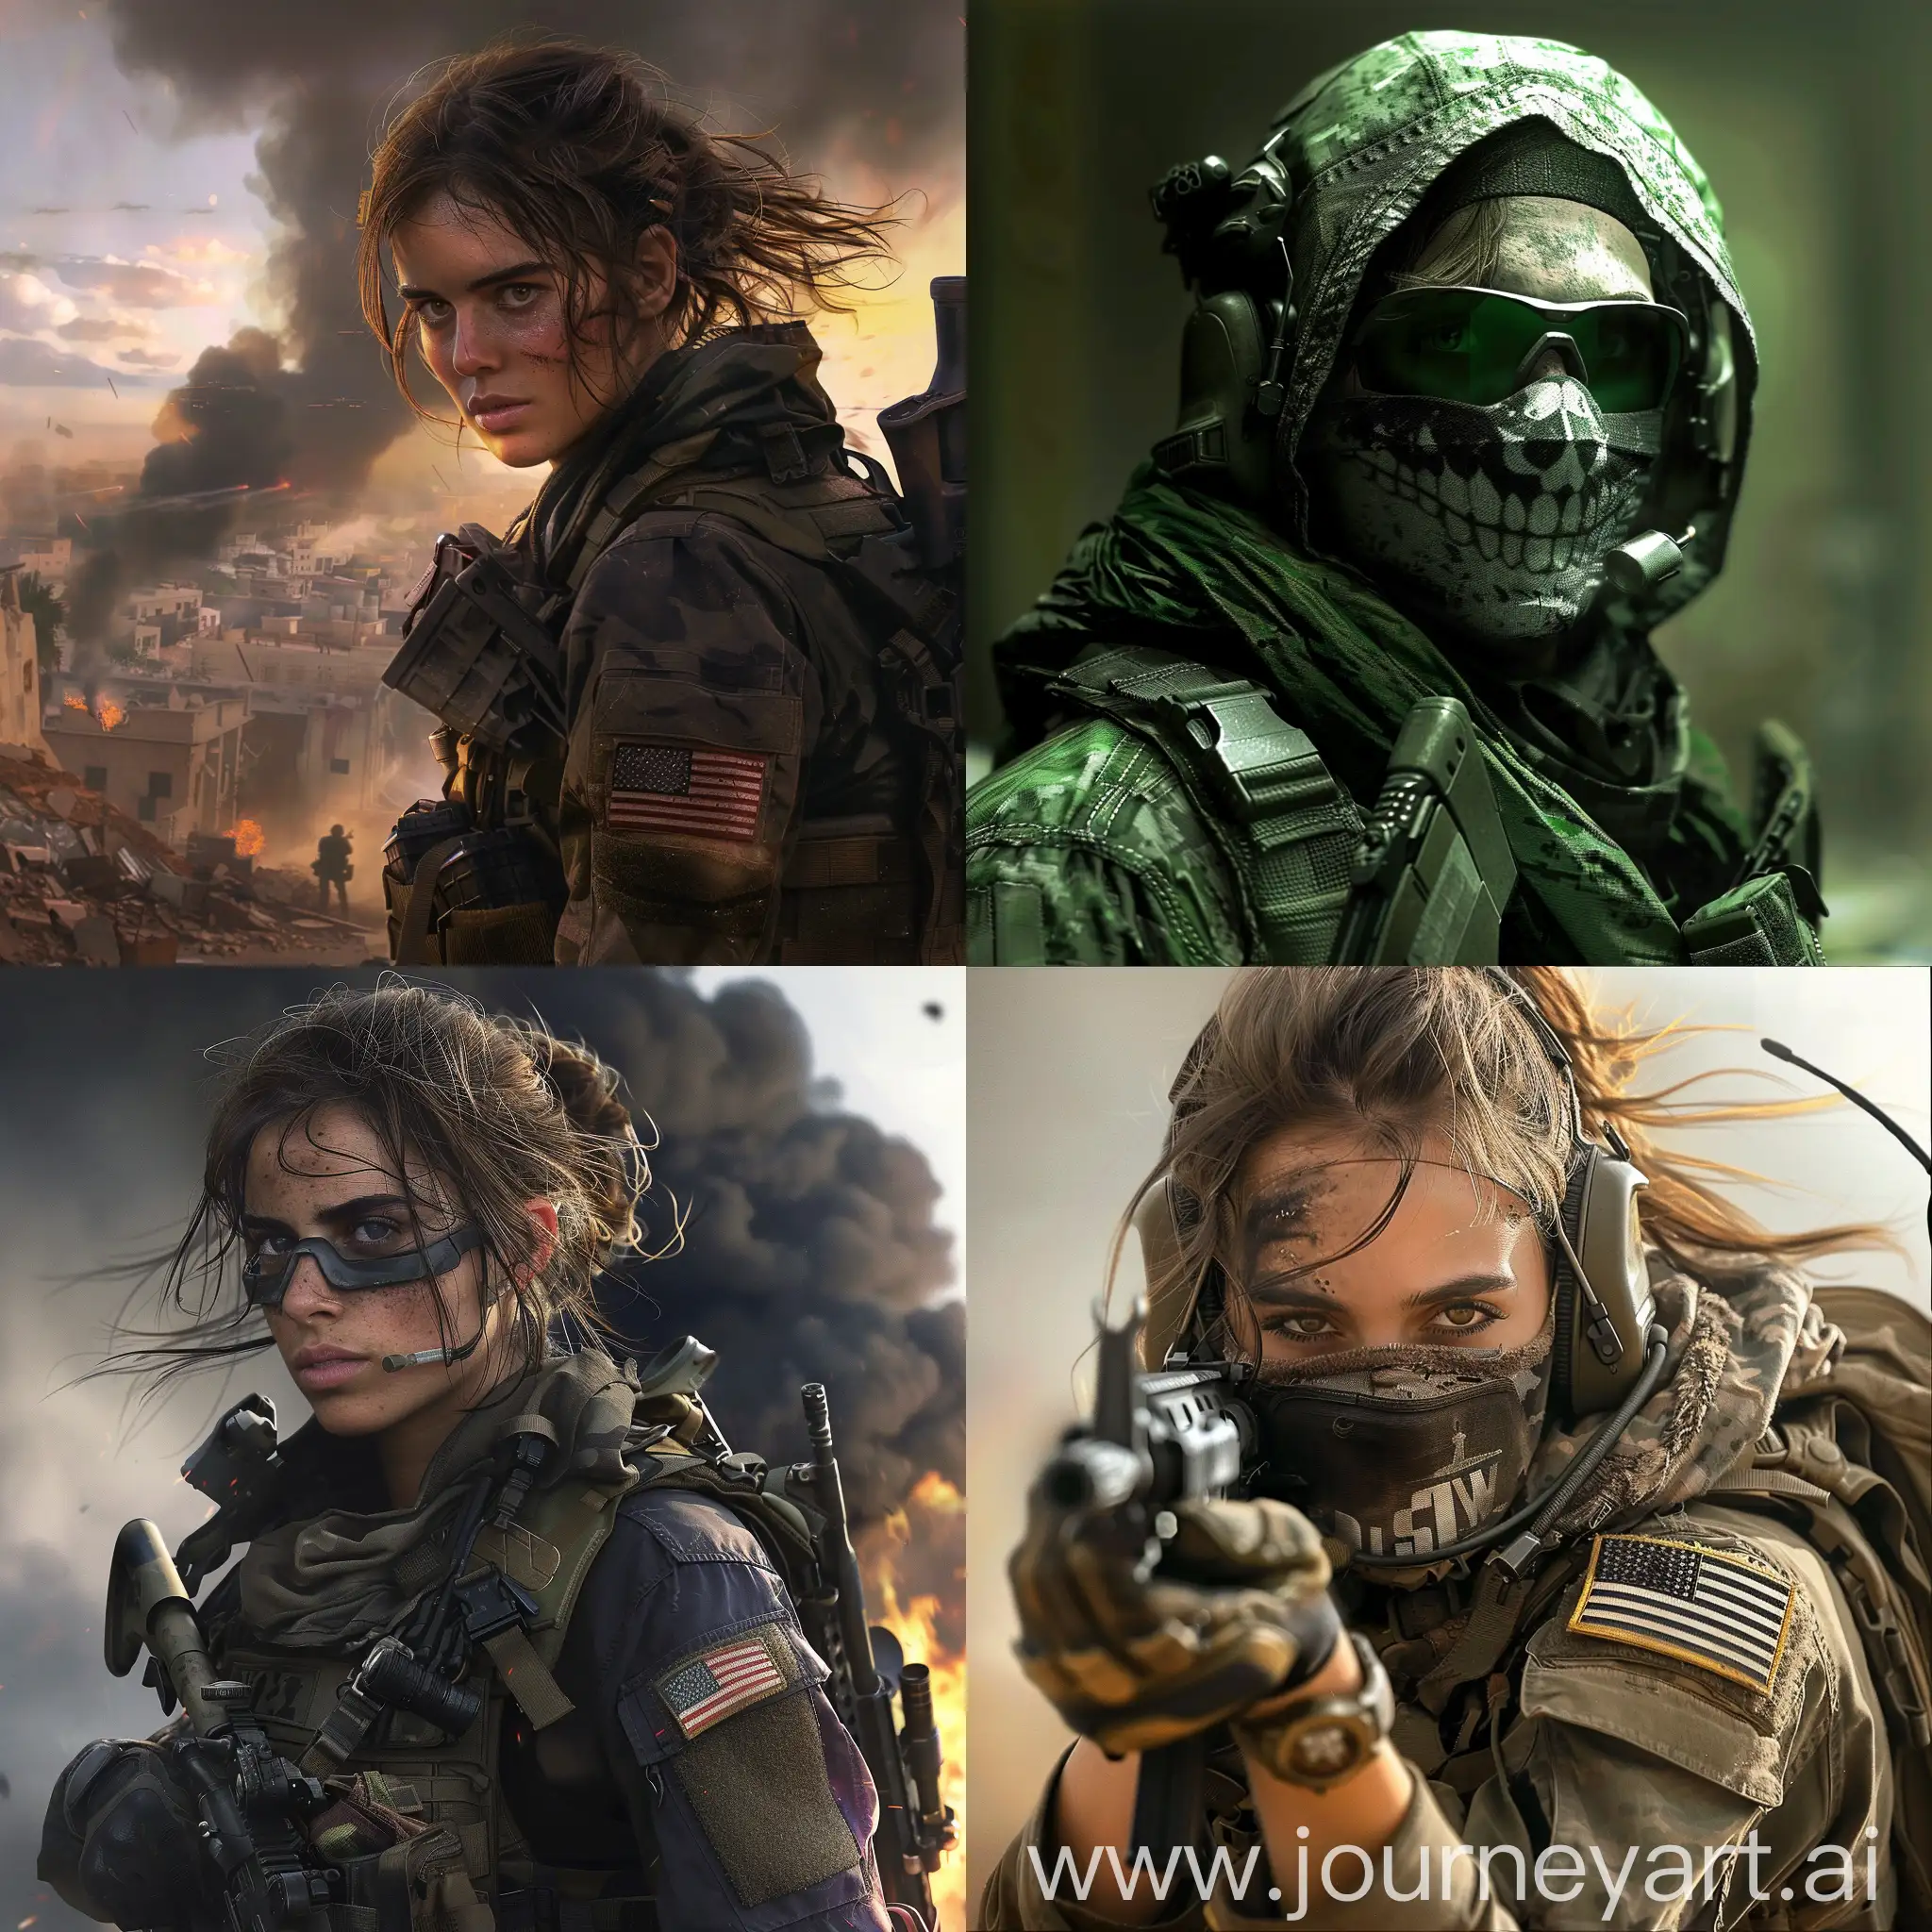 Modern-Warfare-3-Izzy-Artwork-Intense-Combat-Scene-with-Character-Izzy